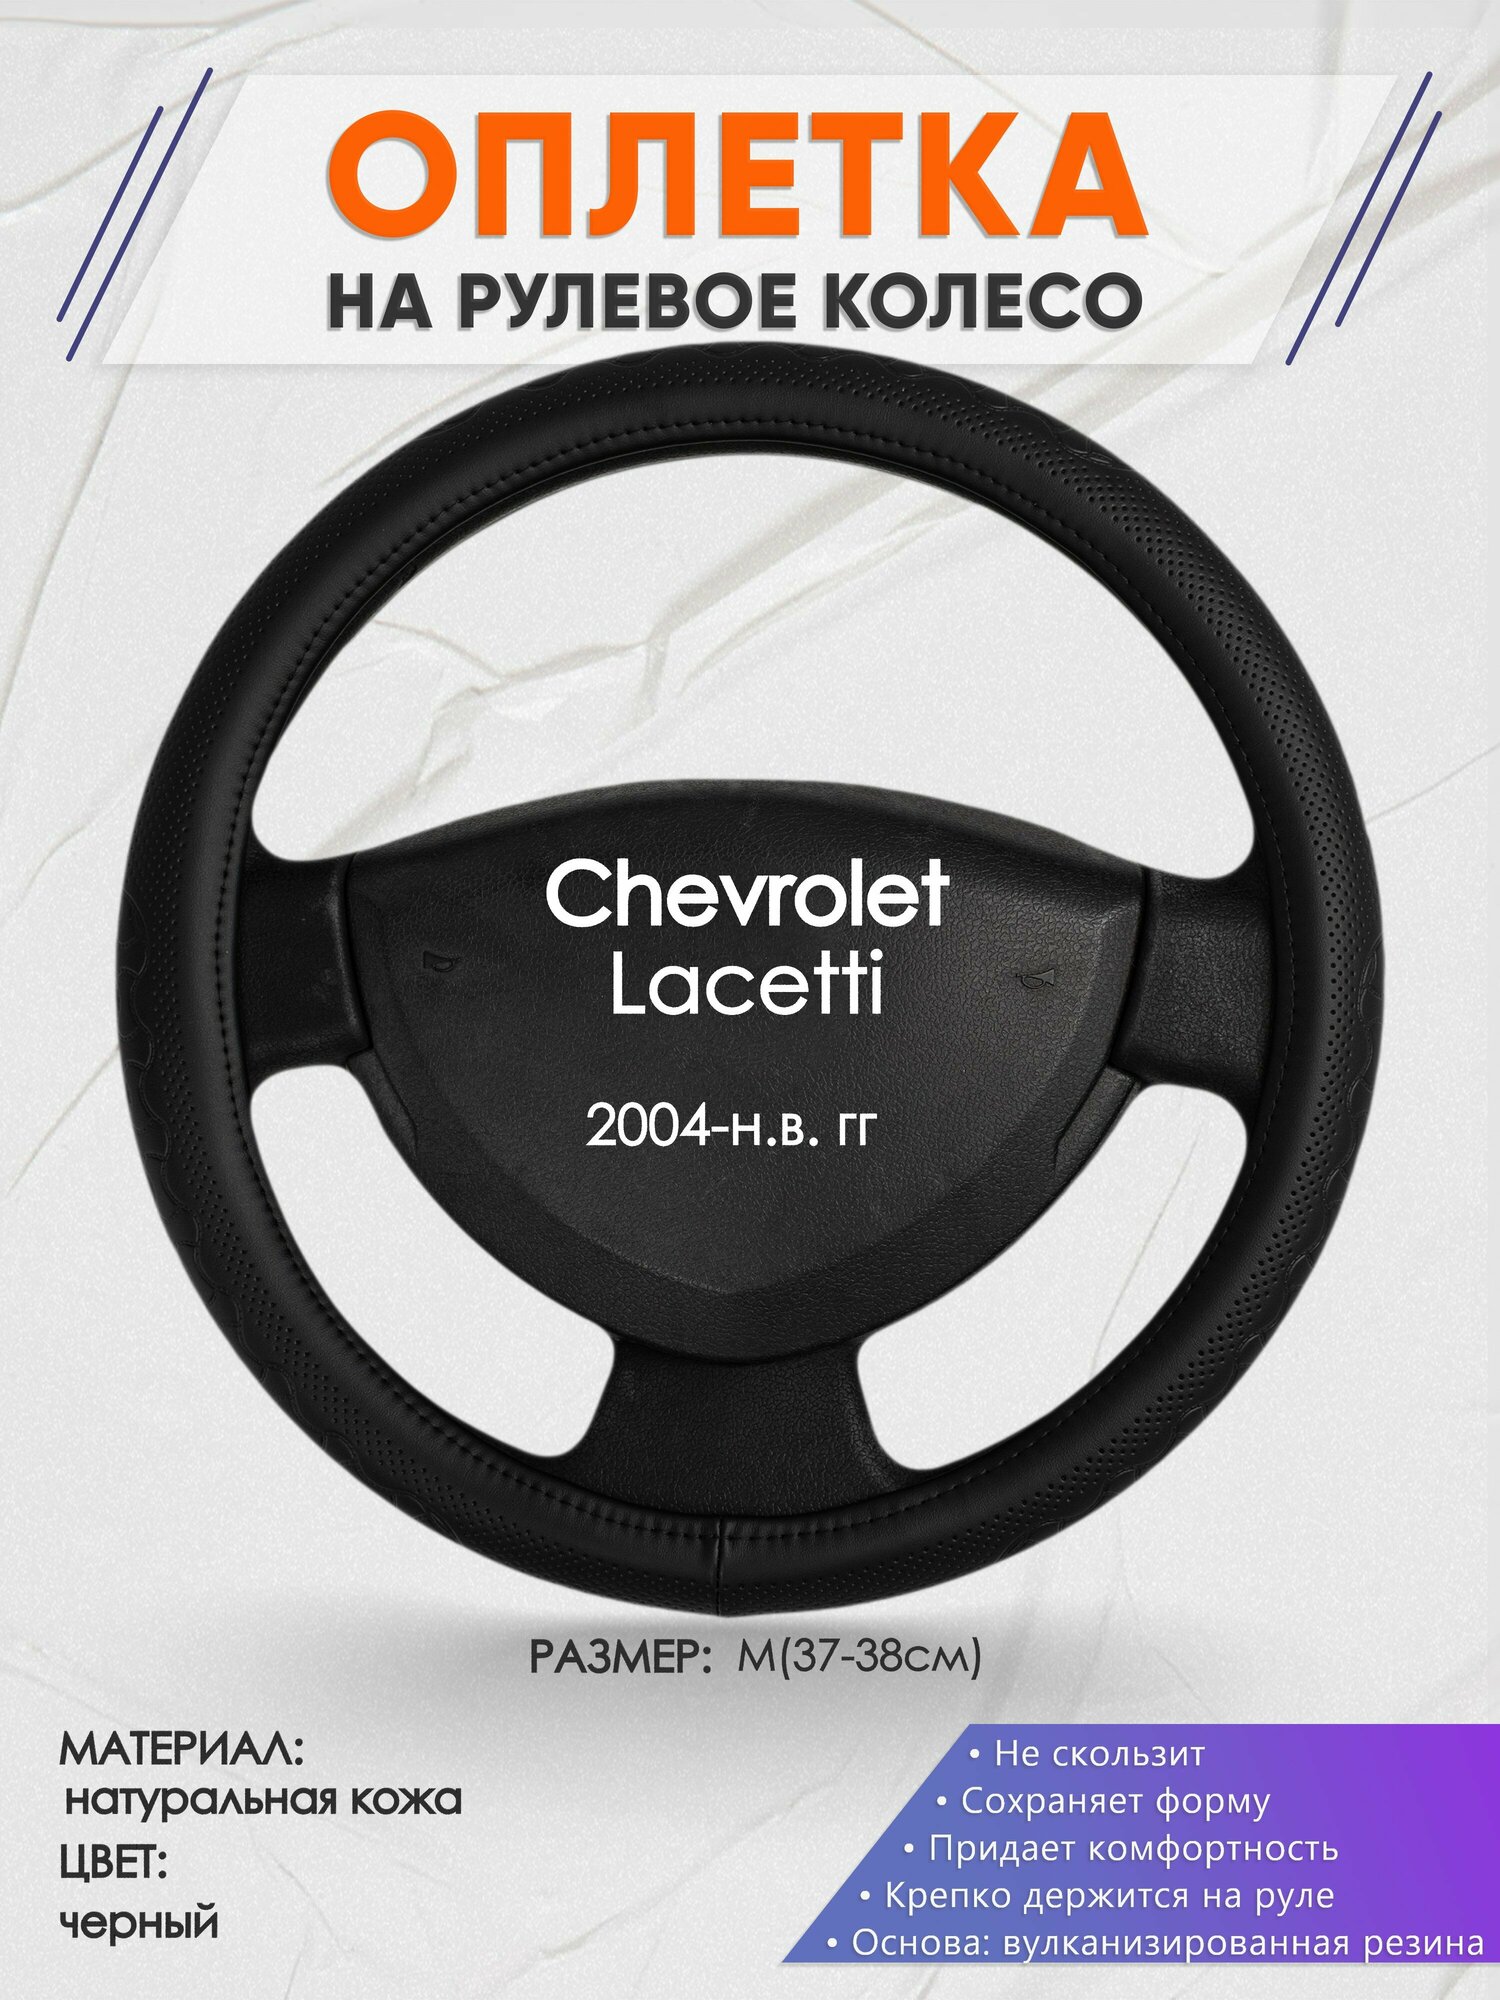 Оплетка на руль для Chevrolet Lacetti (Шевроле Лачети) 2004-н. в, M(37-38см), Натуральная кожа 25